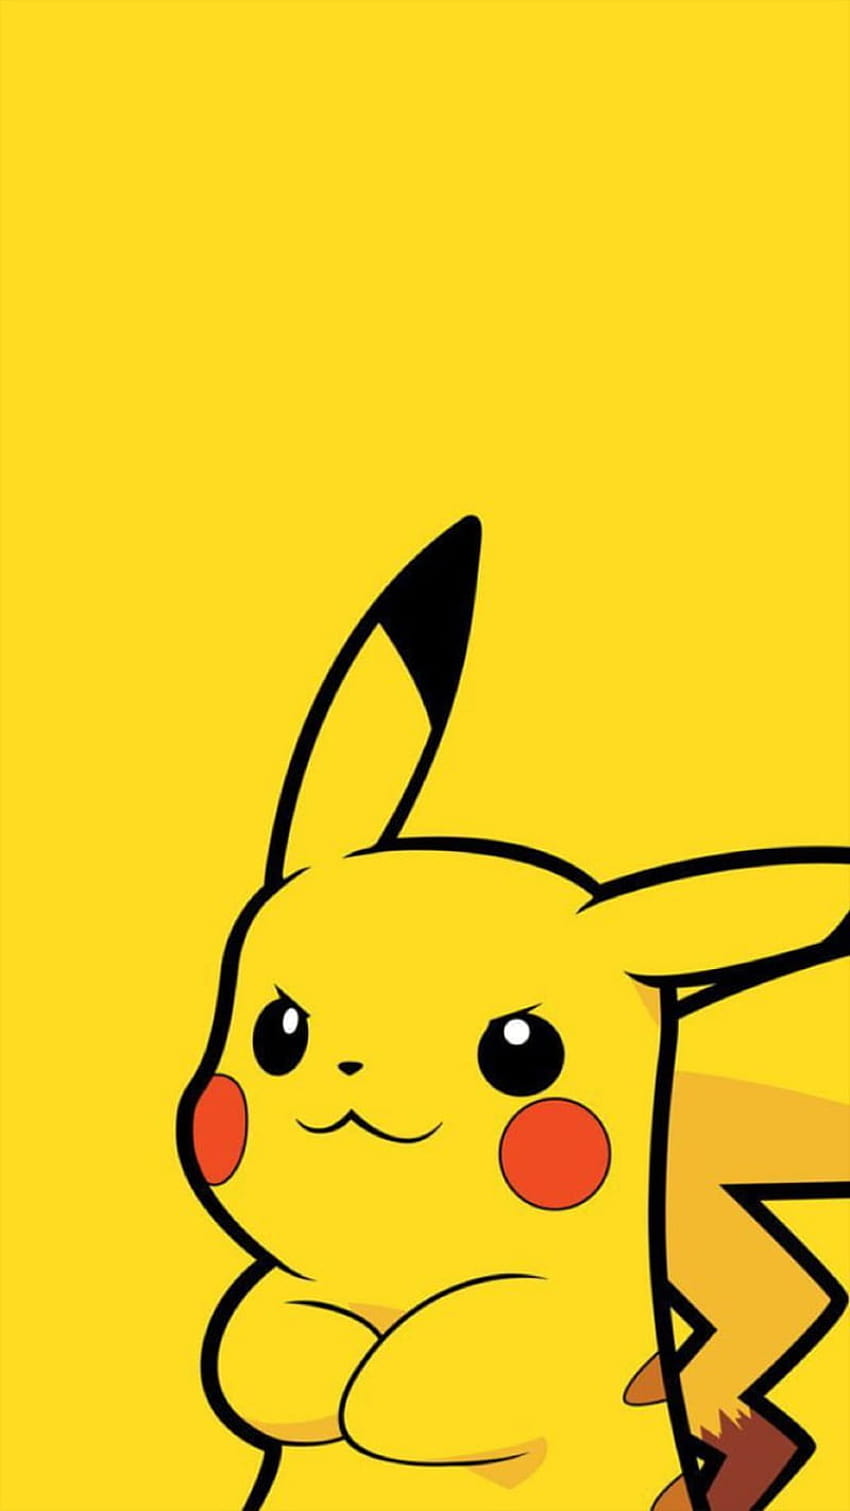 IPhone wallpaper of a cute Pikachu from Pokemon - Pikachu